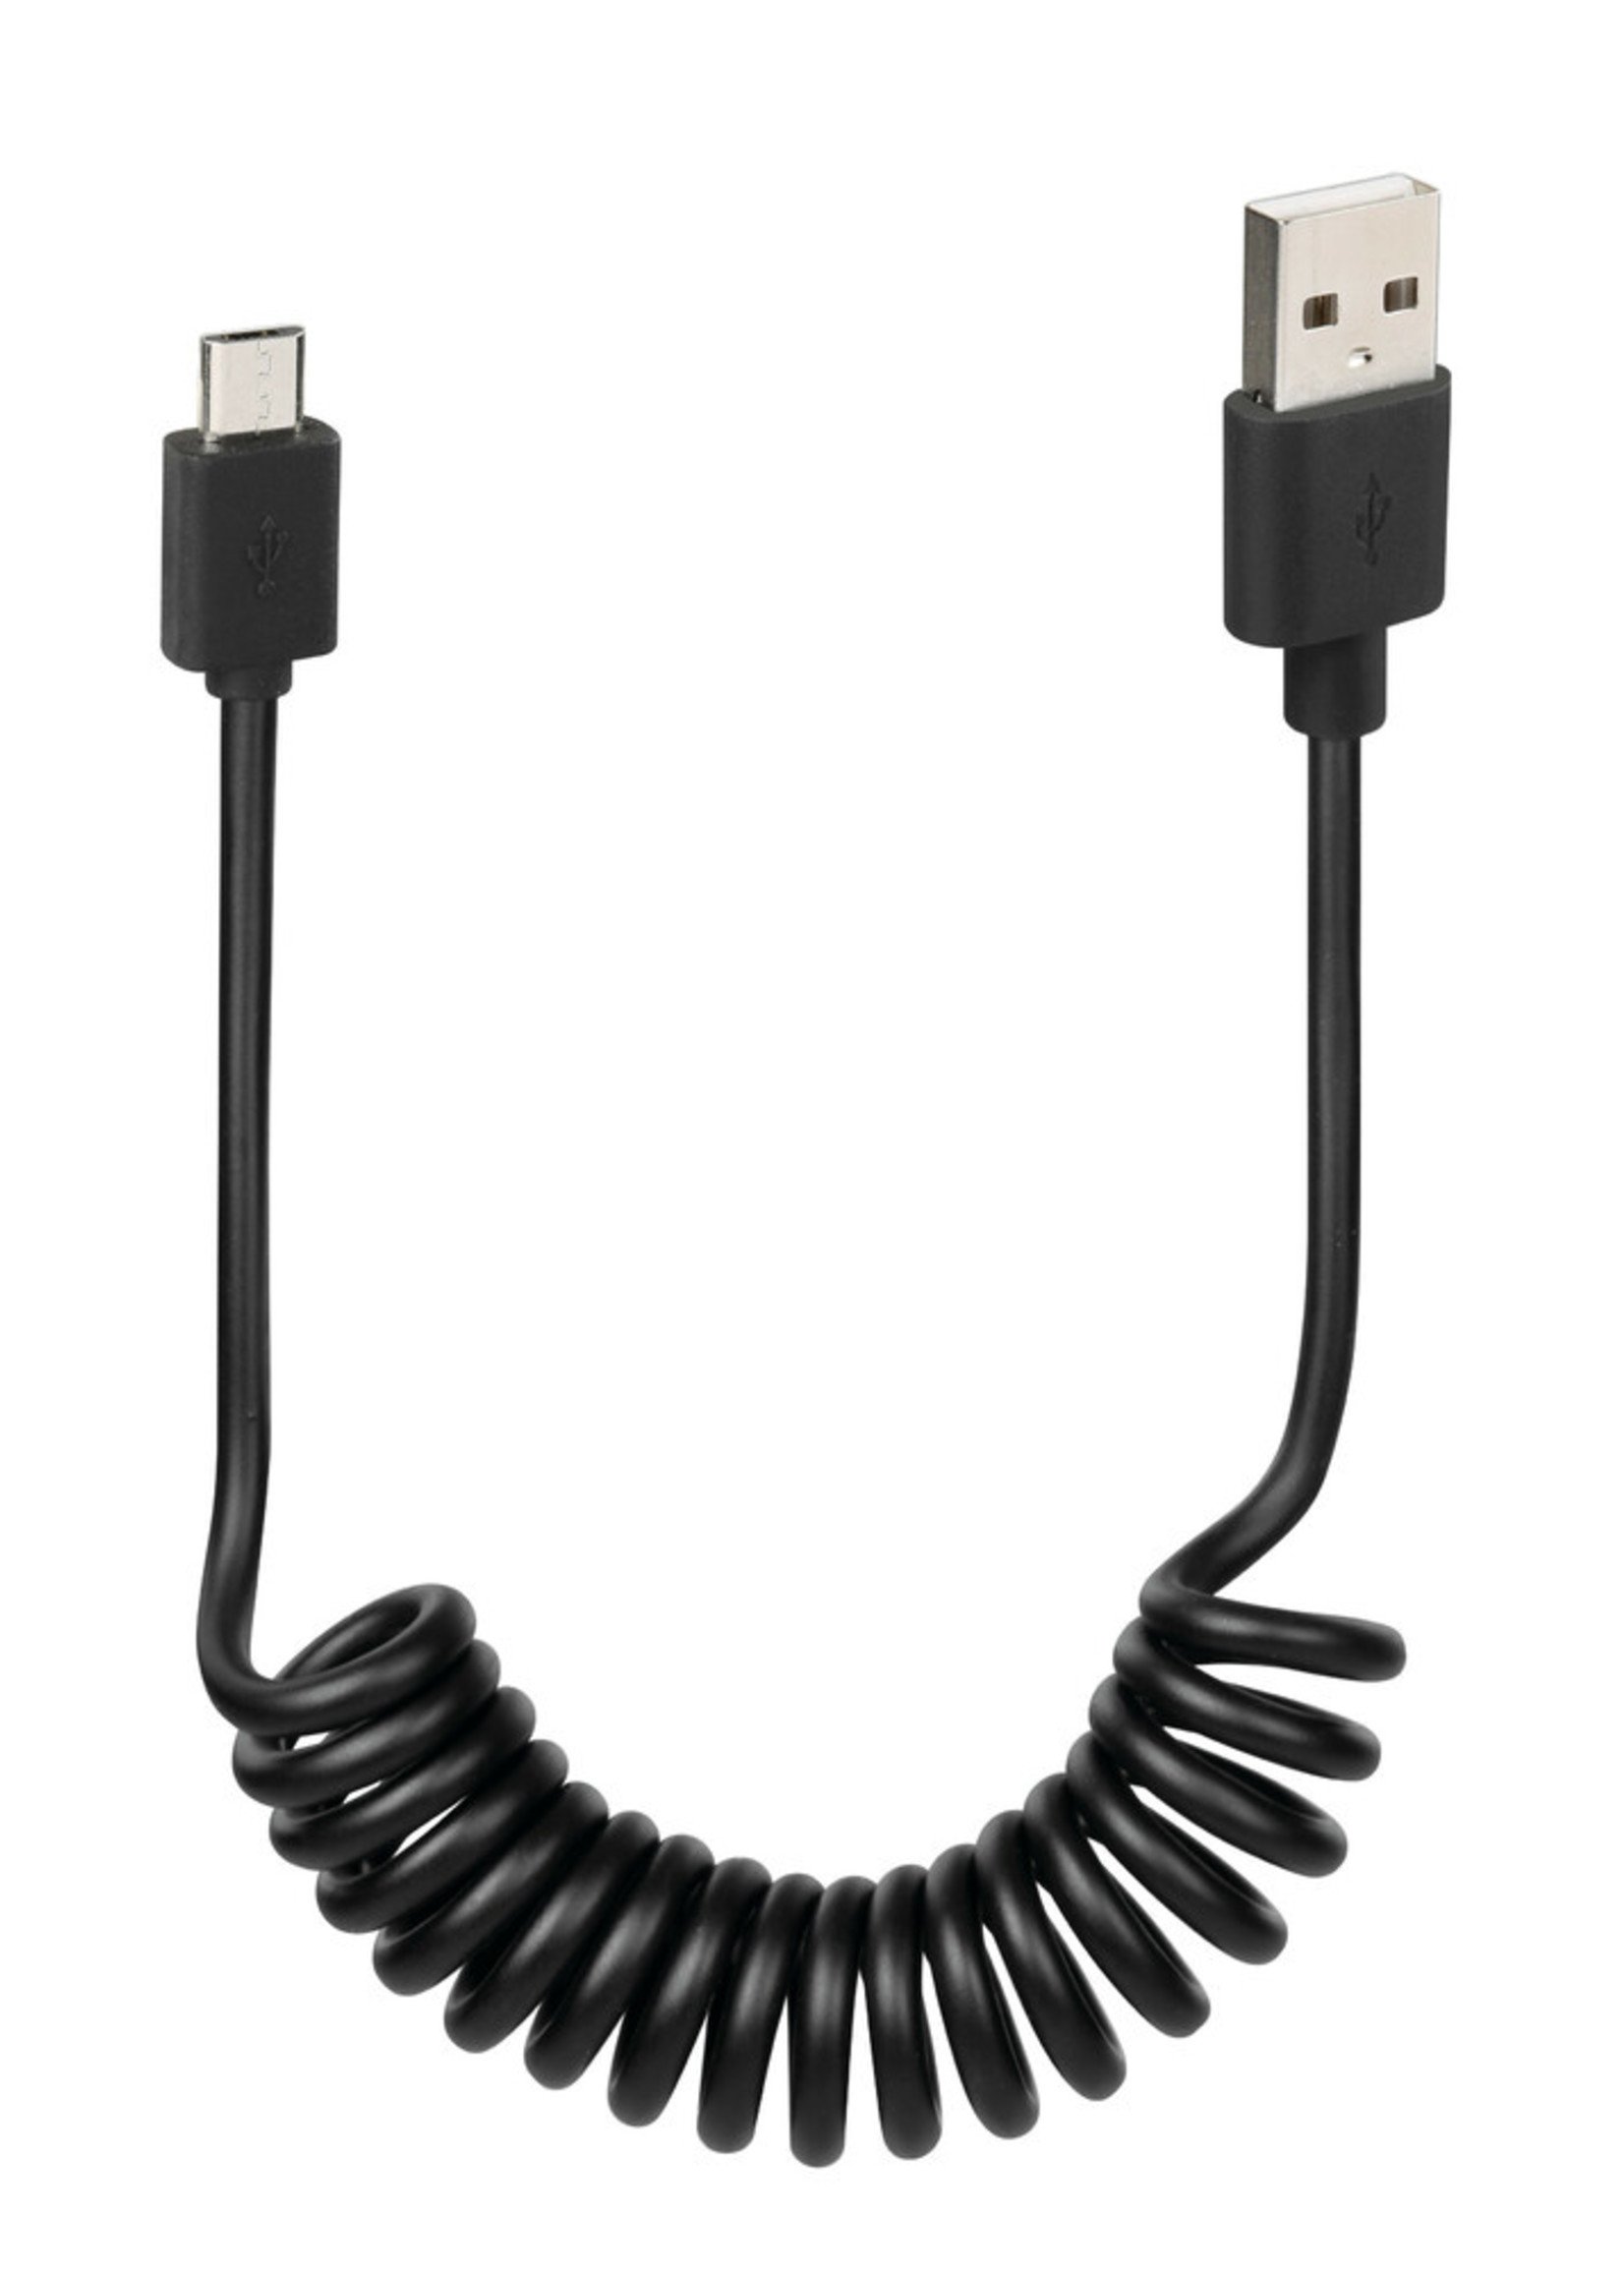 Optiline Spring cable Usb > Micro Usb - 100 cm - Black